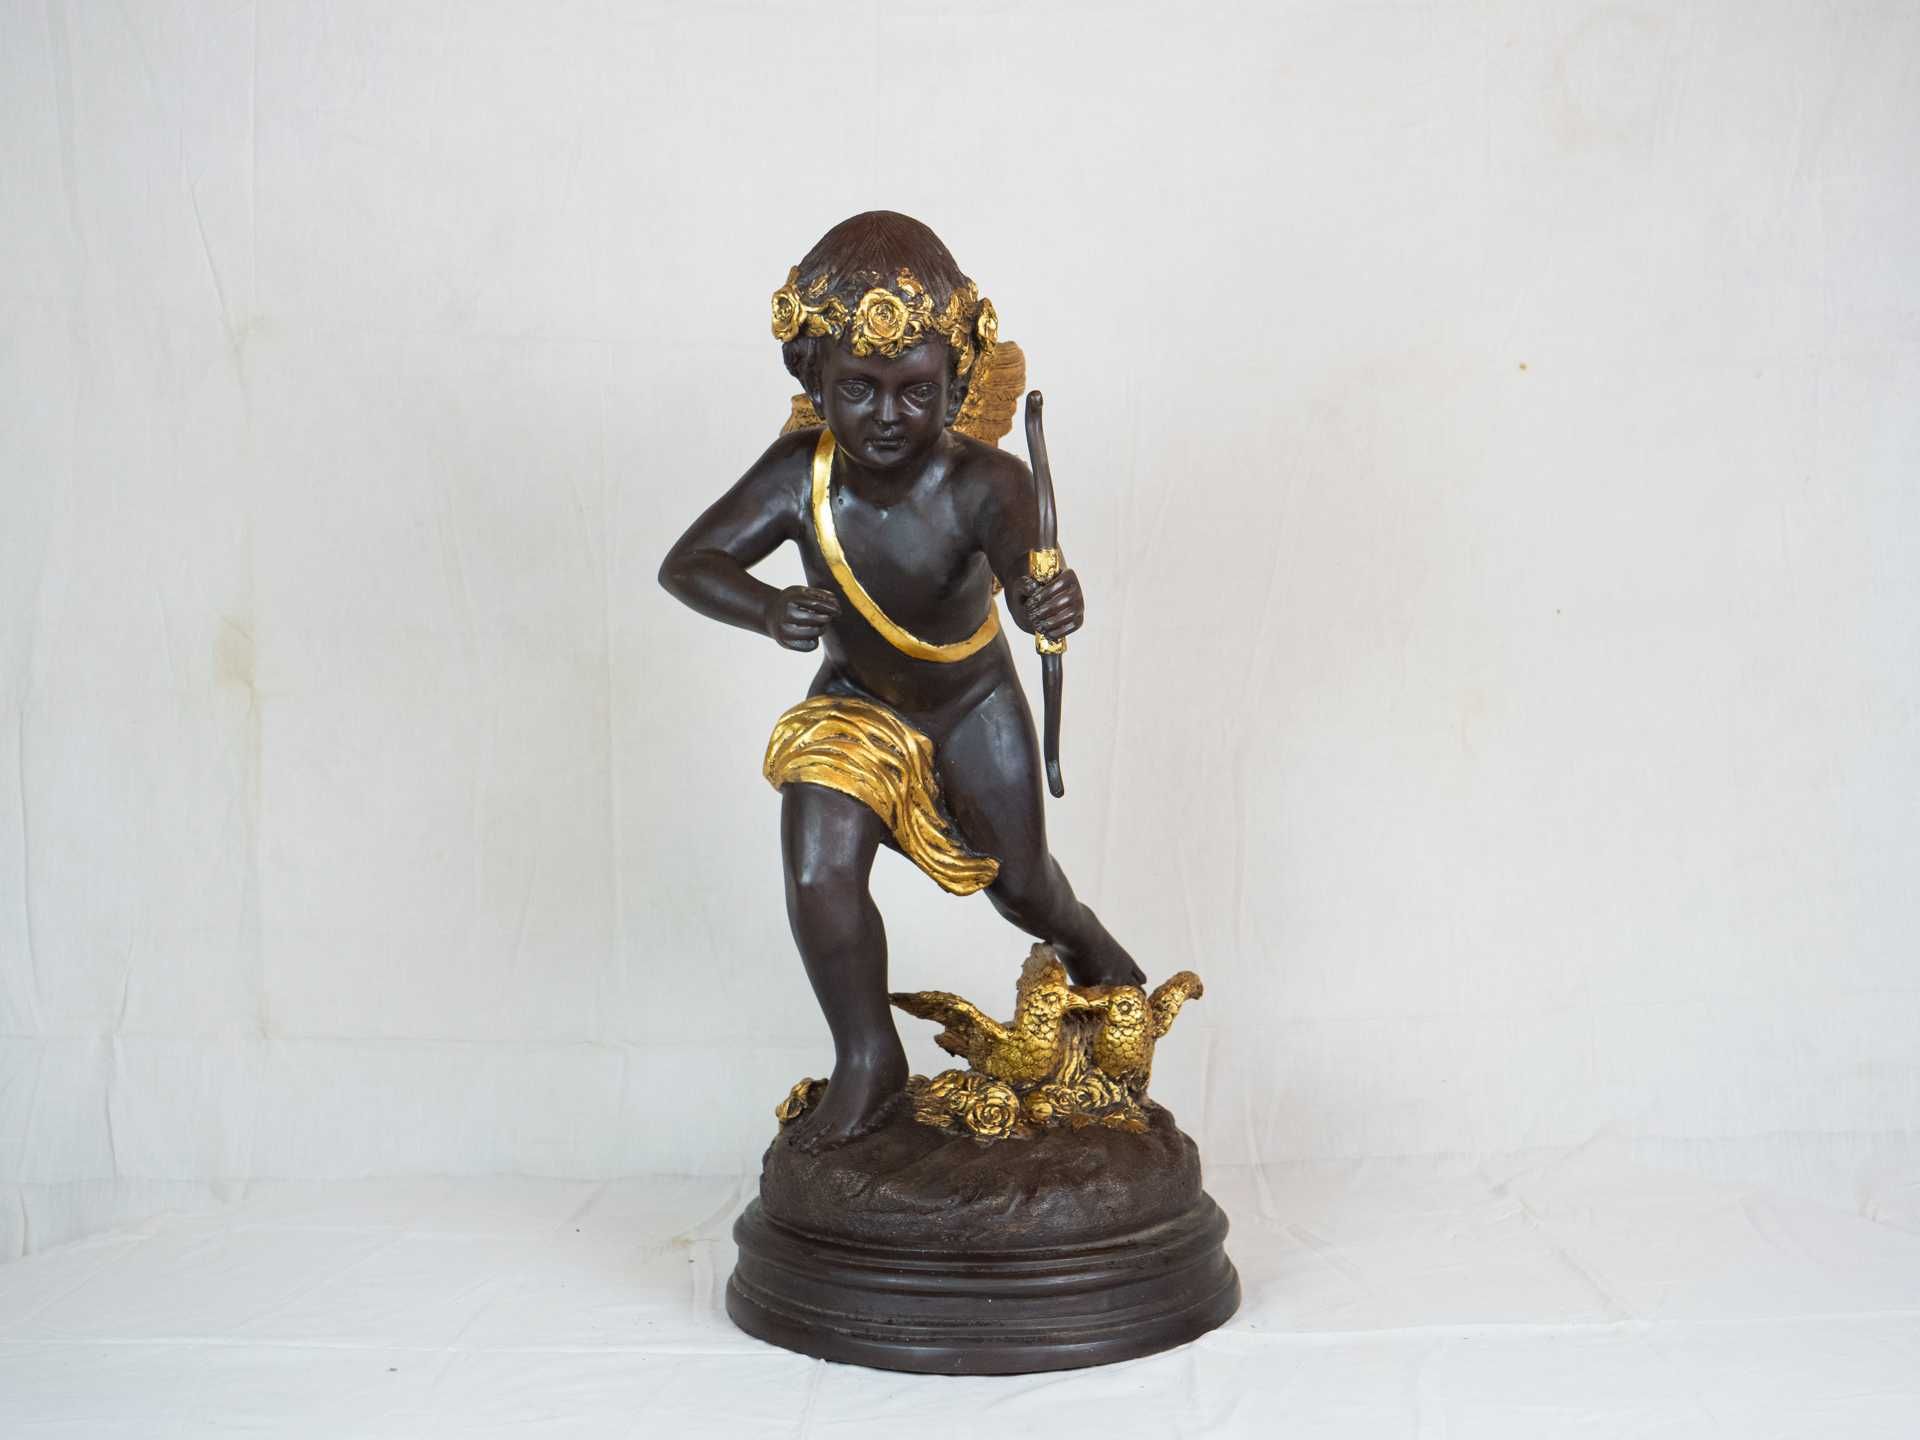 Statuie mare bronz Cupid semnata Daste